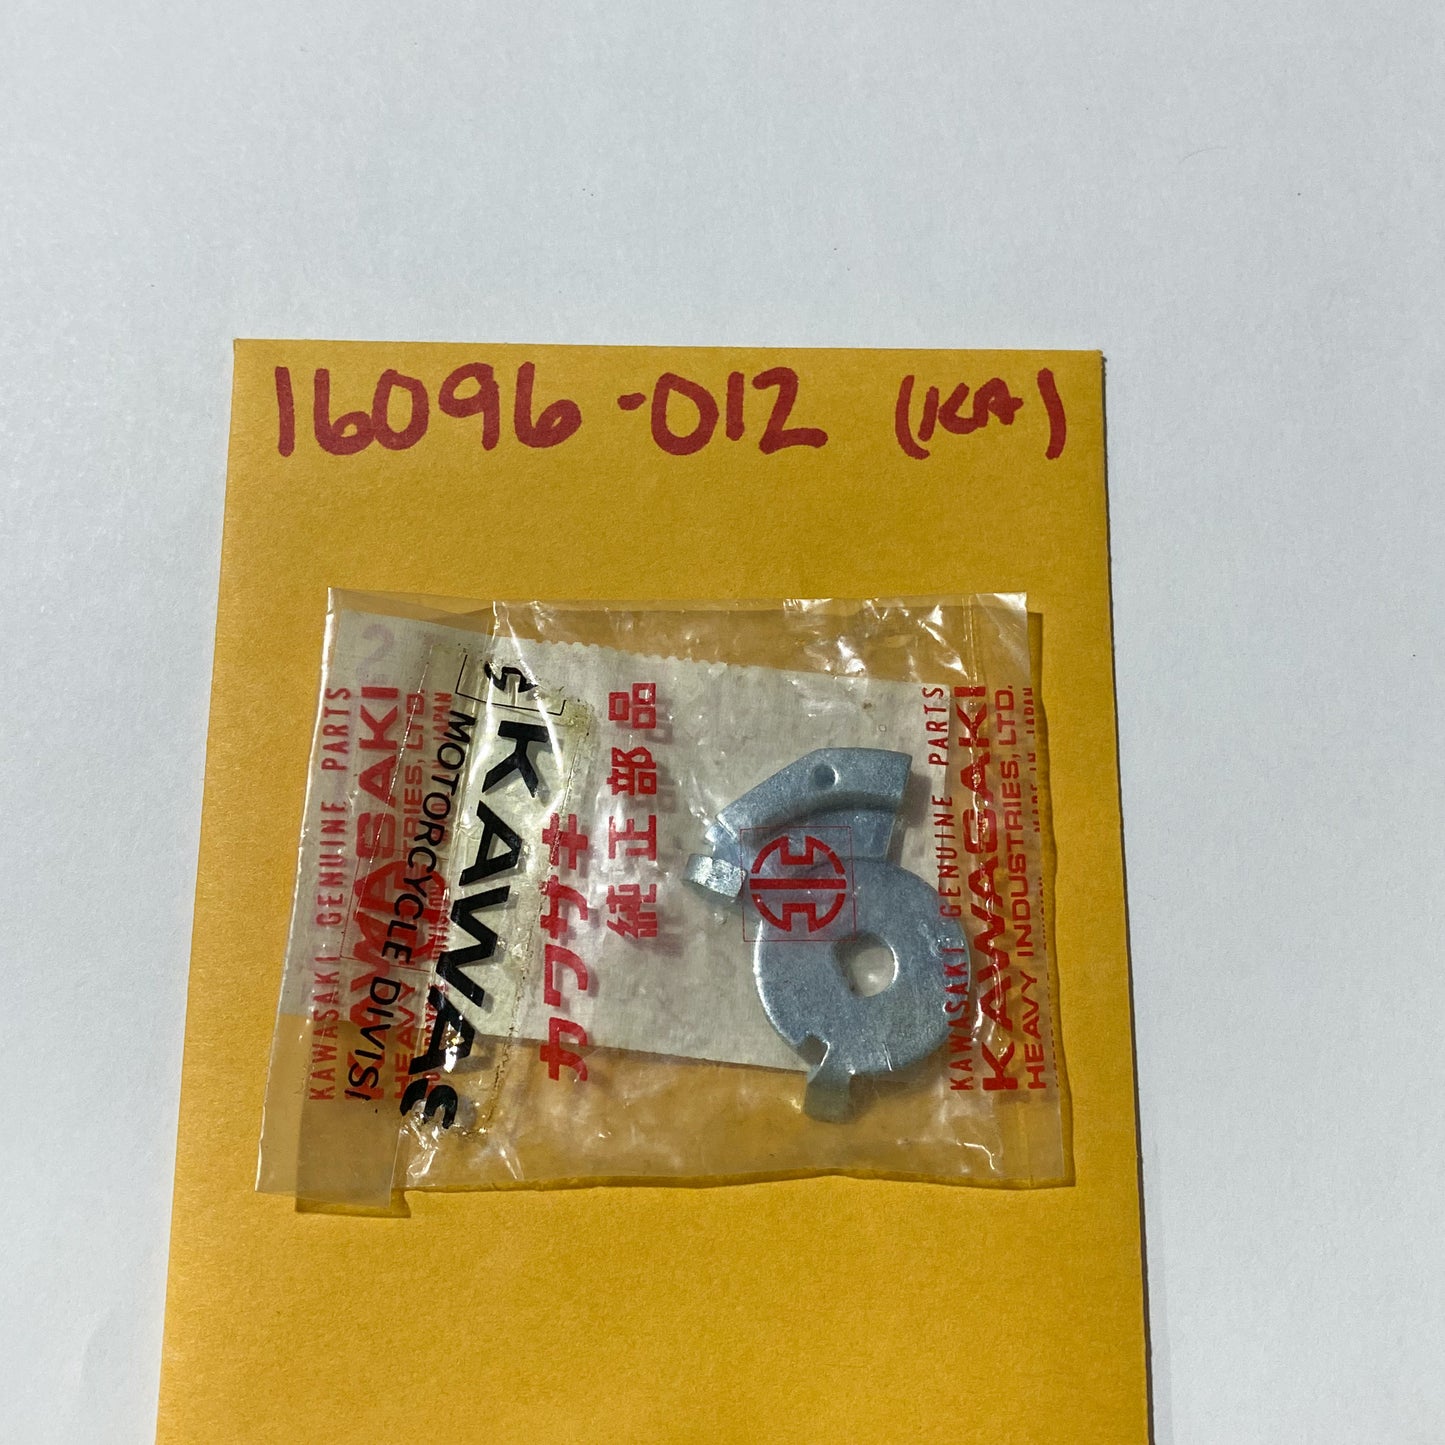 KAWASAKI OIL PUMP CABLE LEVER 16096-012